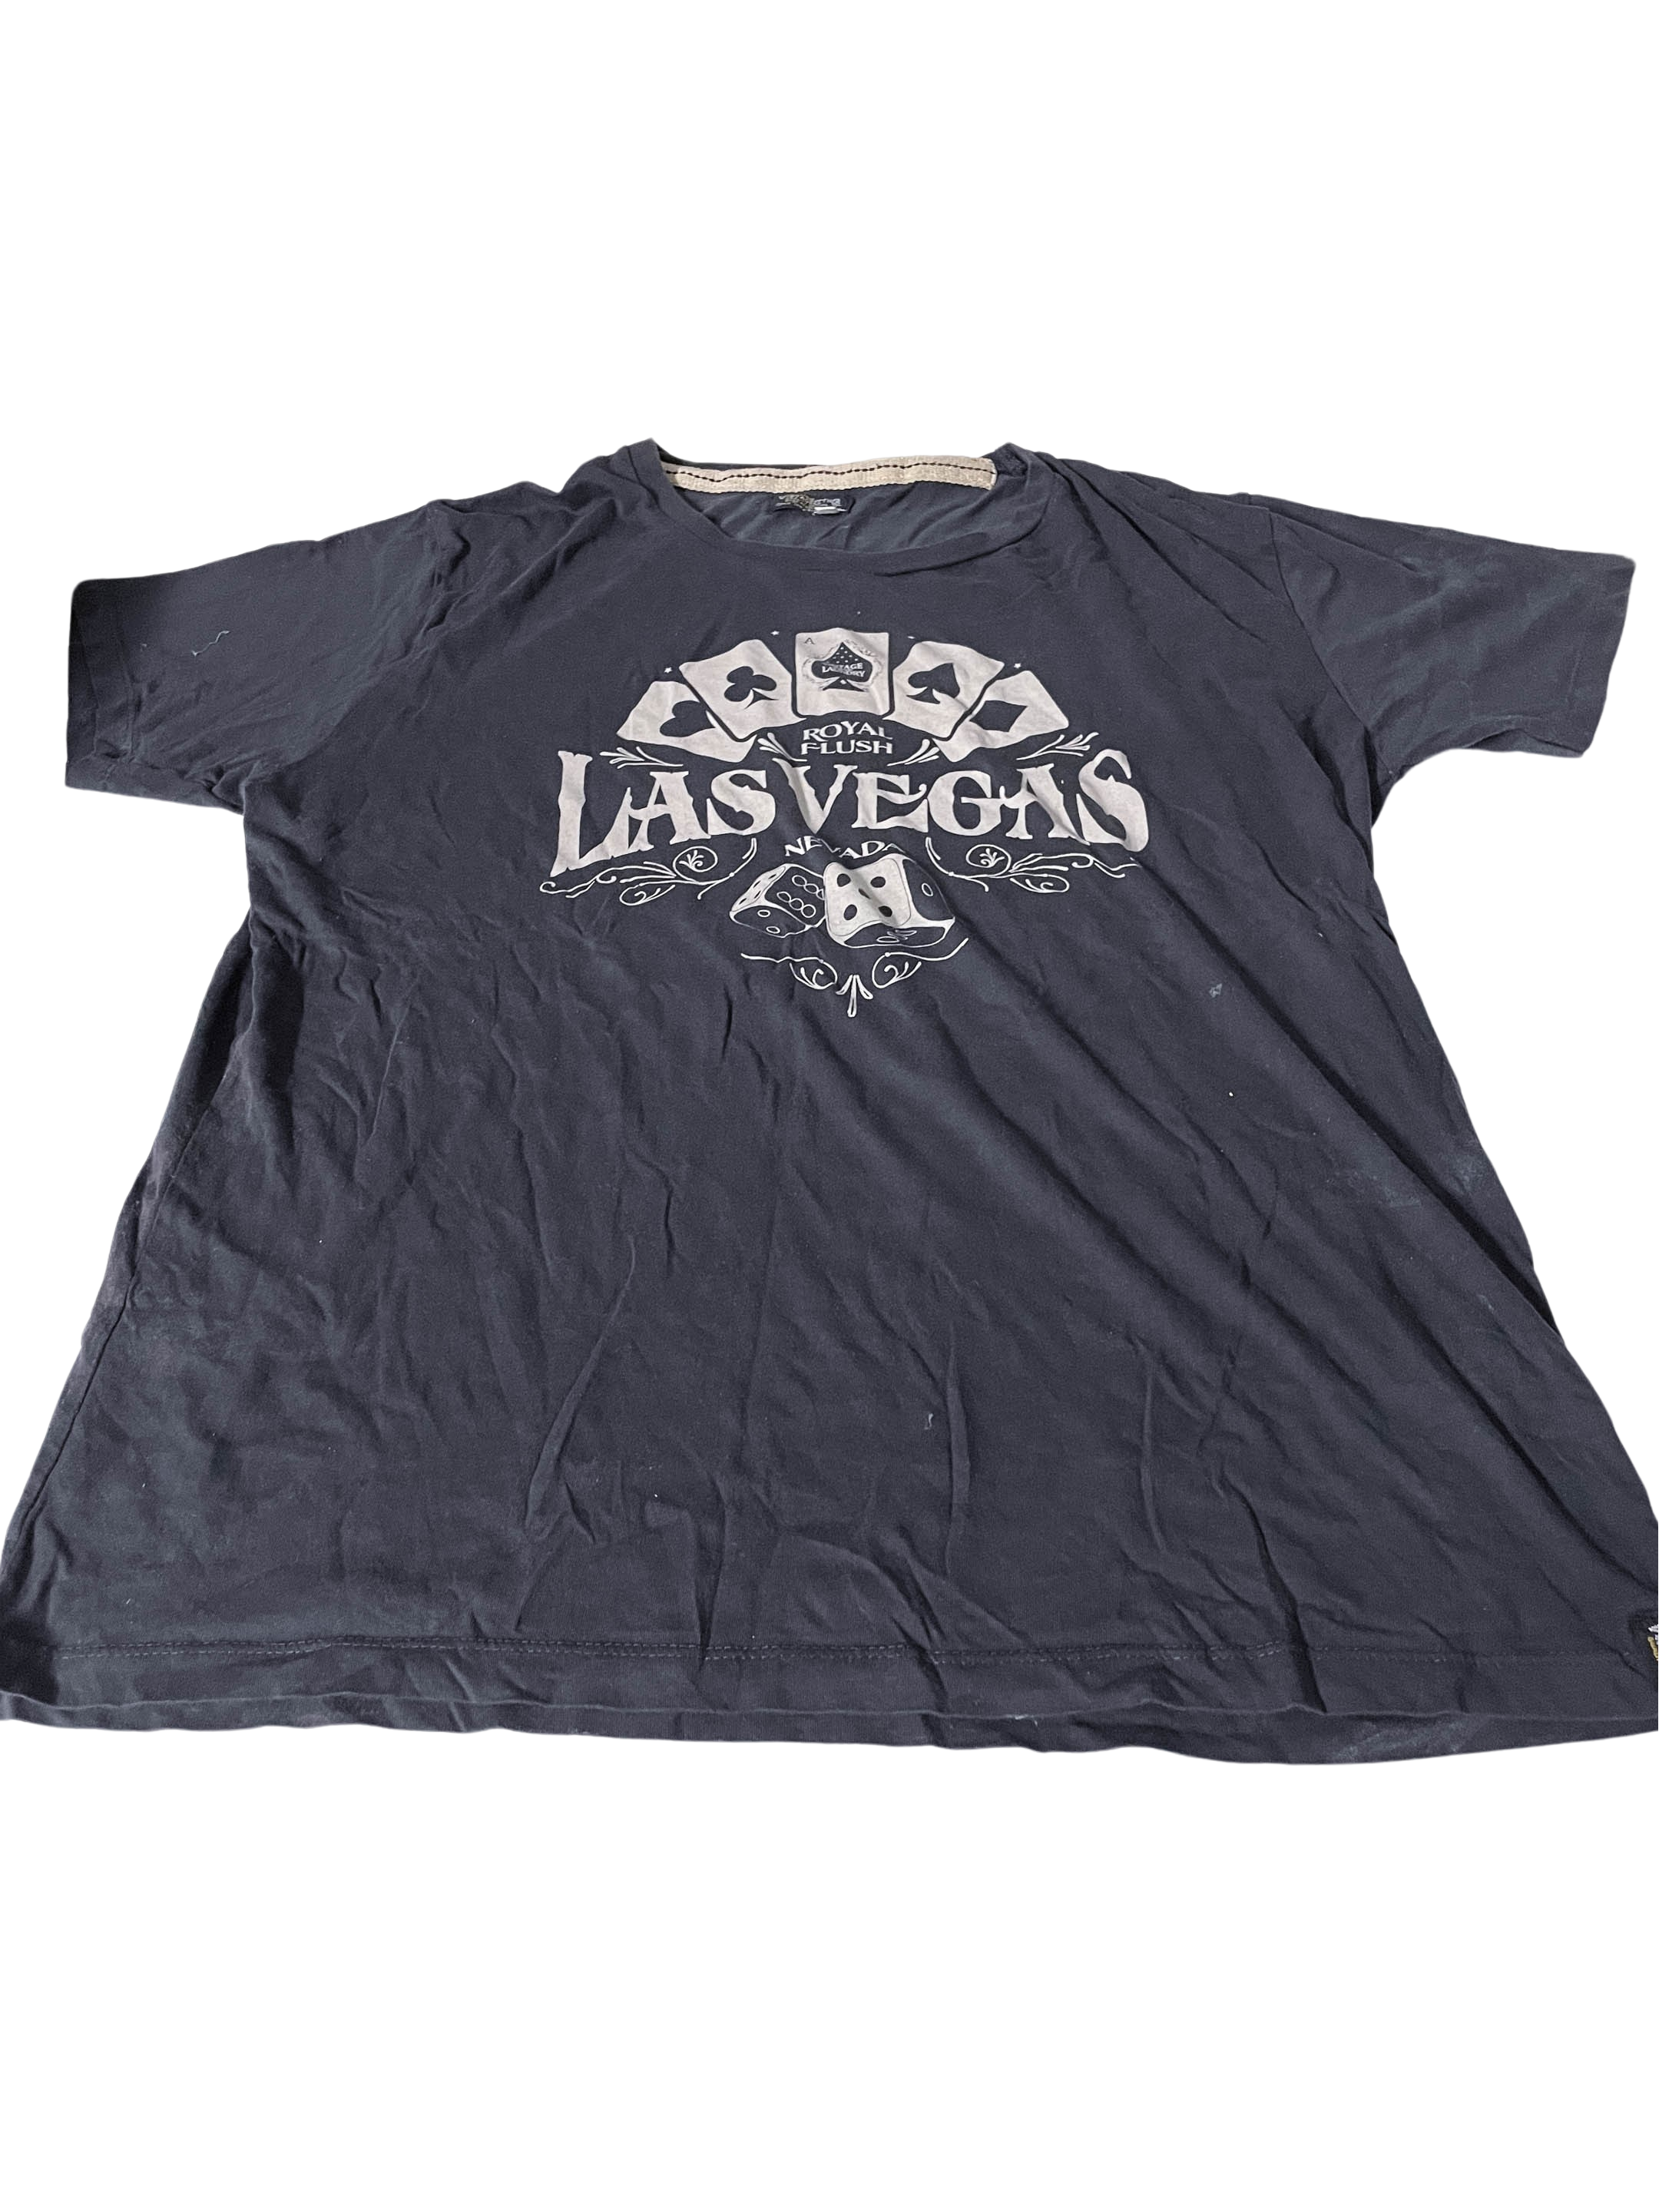 Vintage Las Vegas Nevada Royal Flush graphics black tees XXL